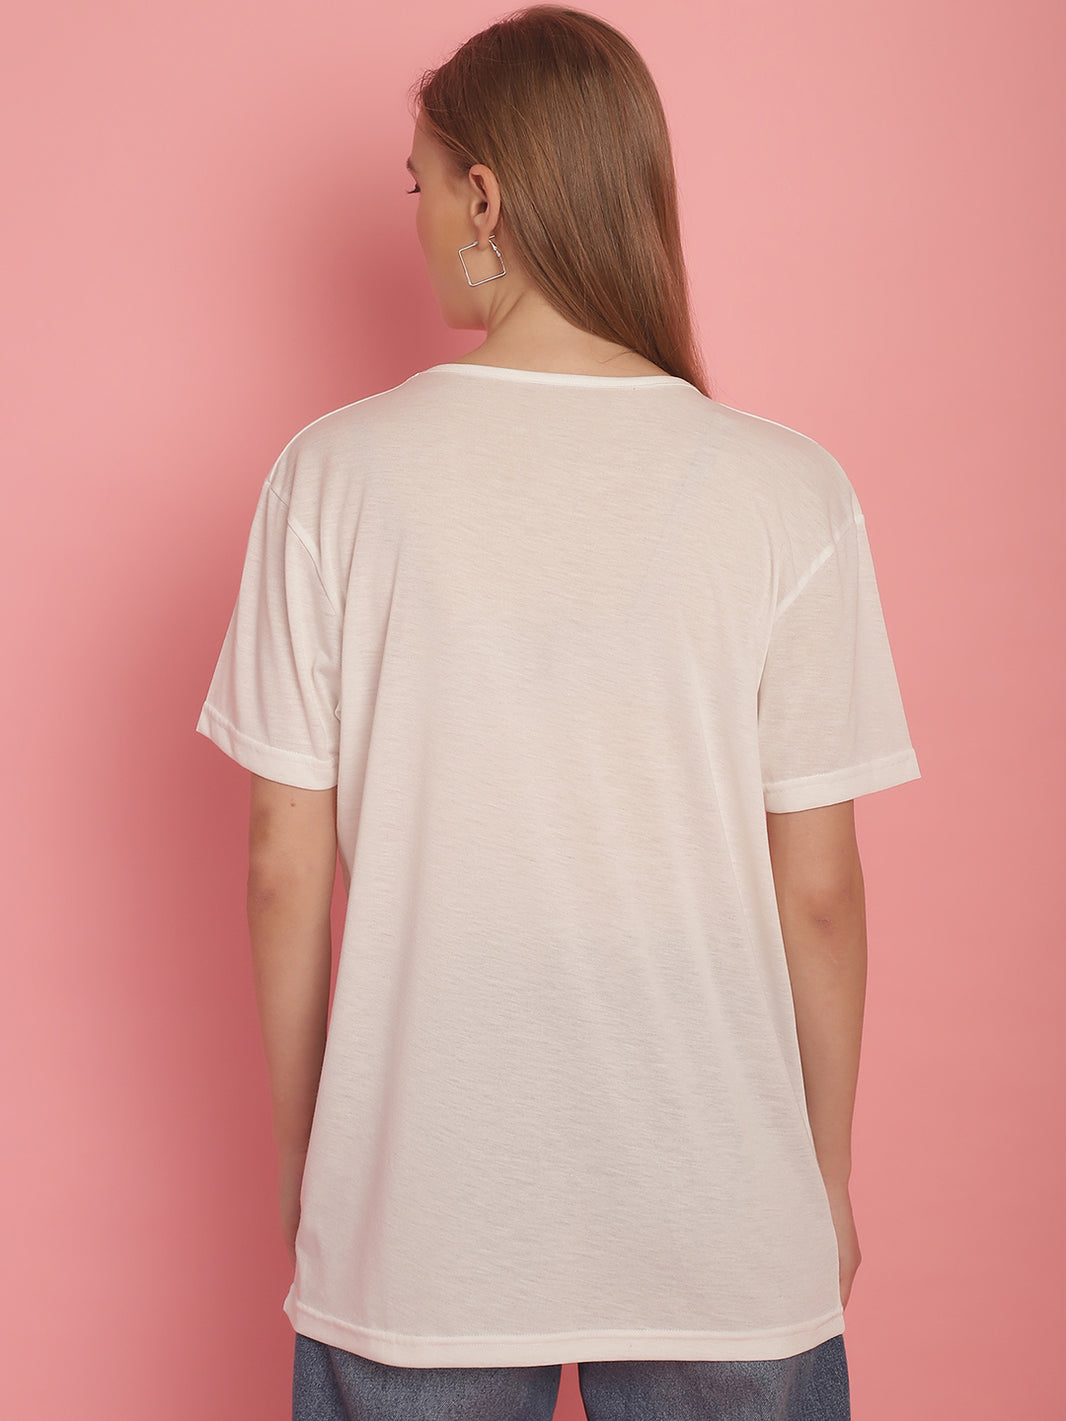 Vimal Jonney Round Neck Cotton Solid White T-Shirt for Women